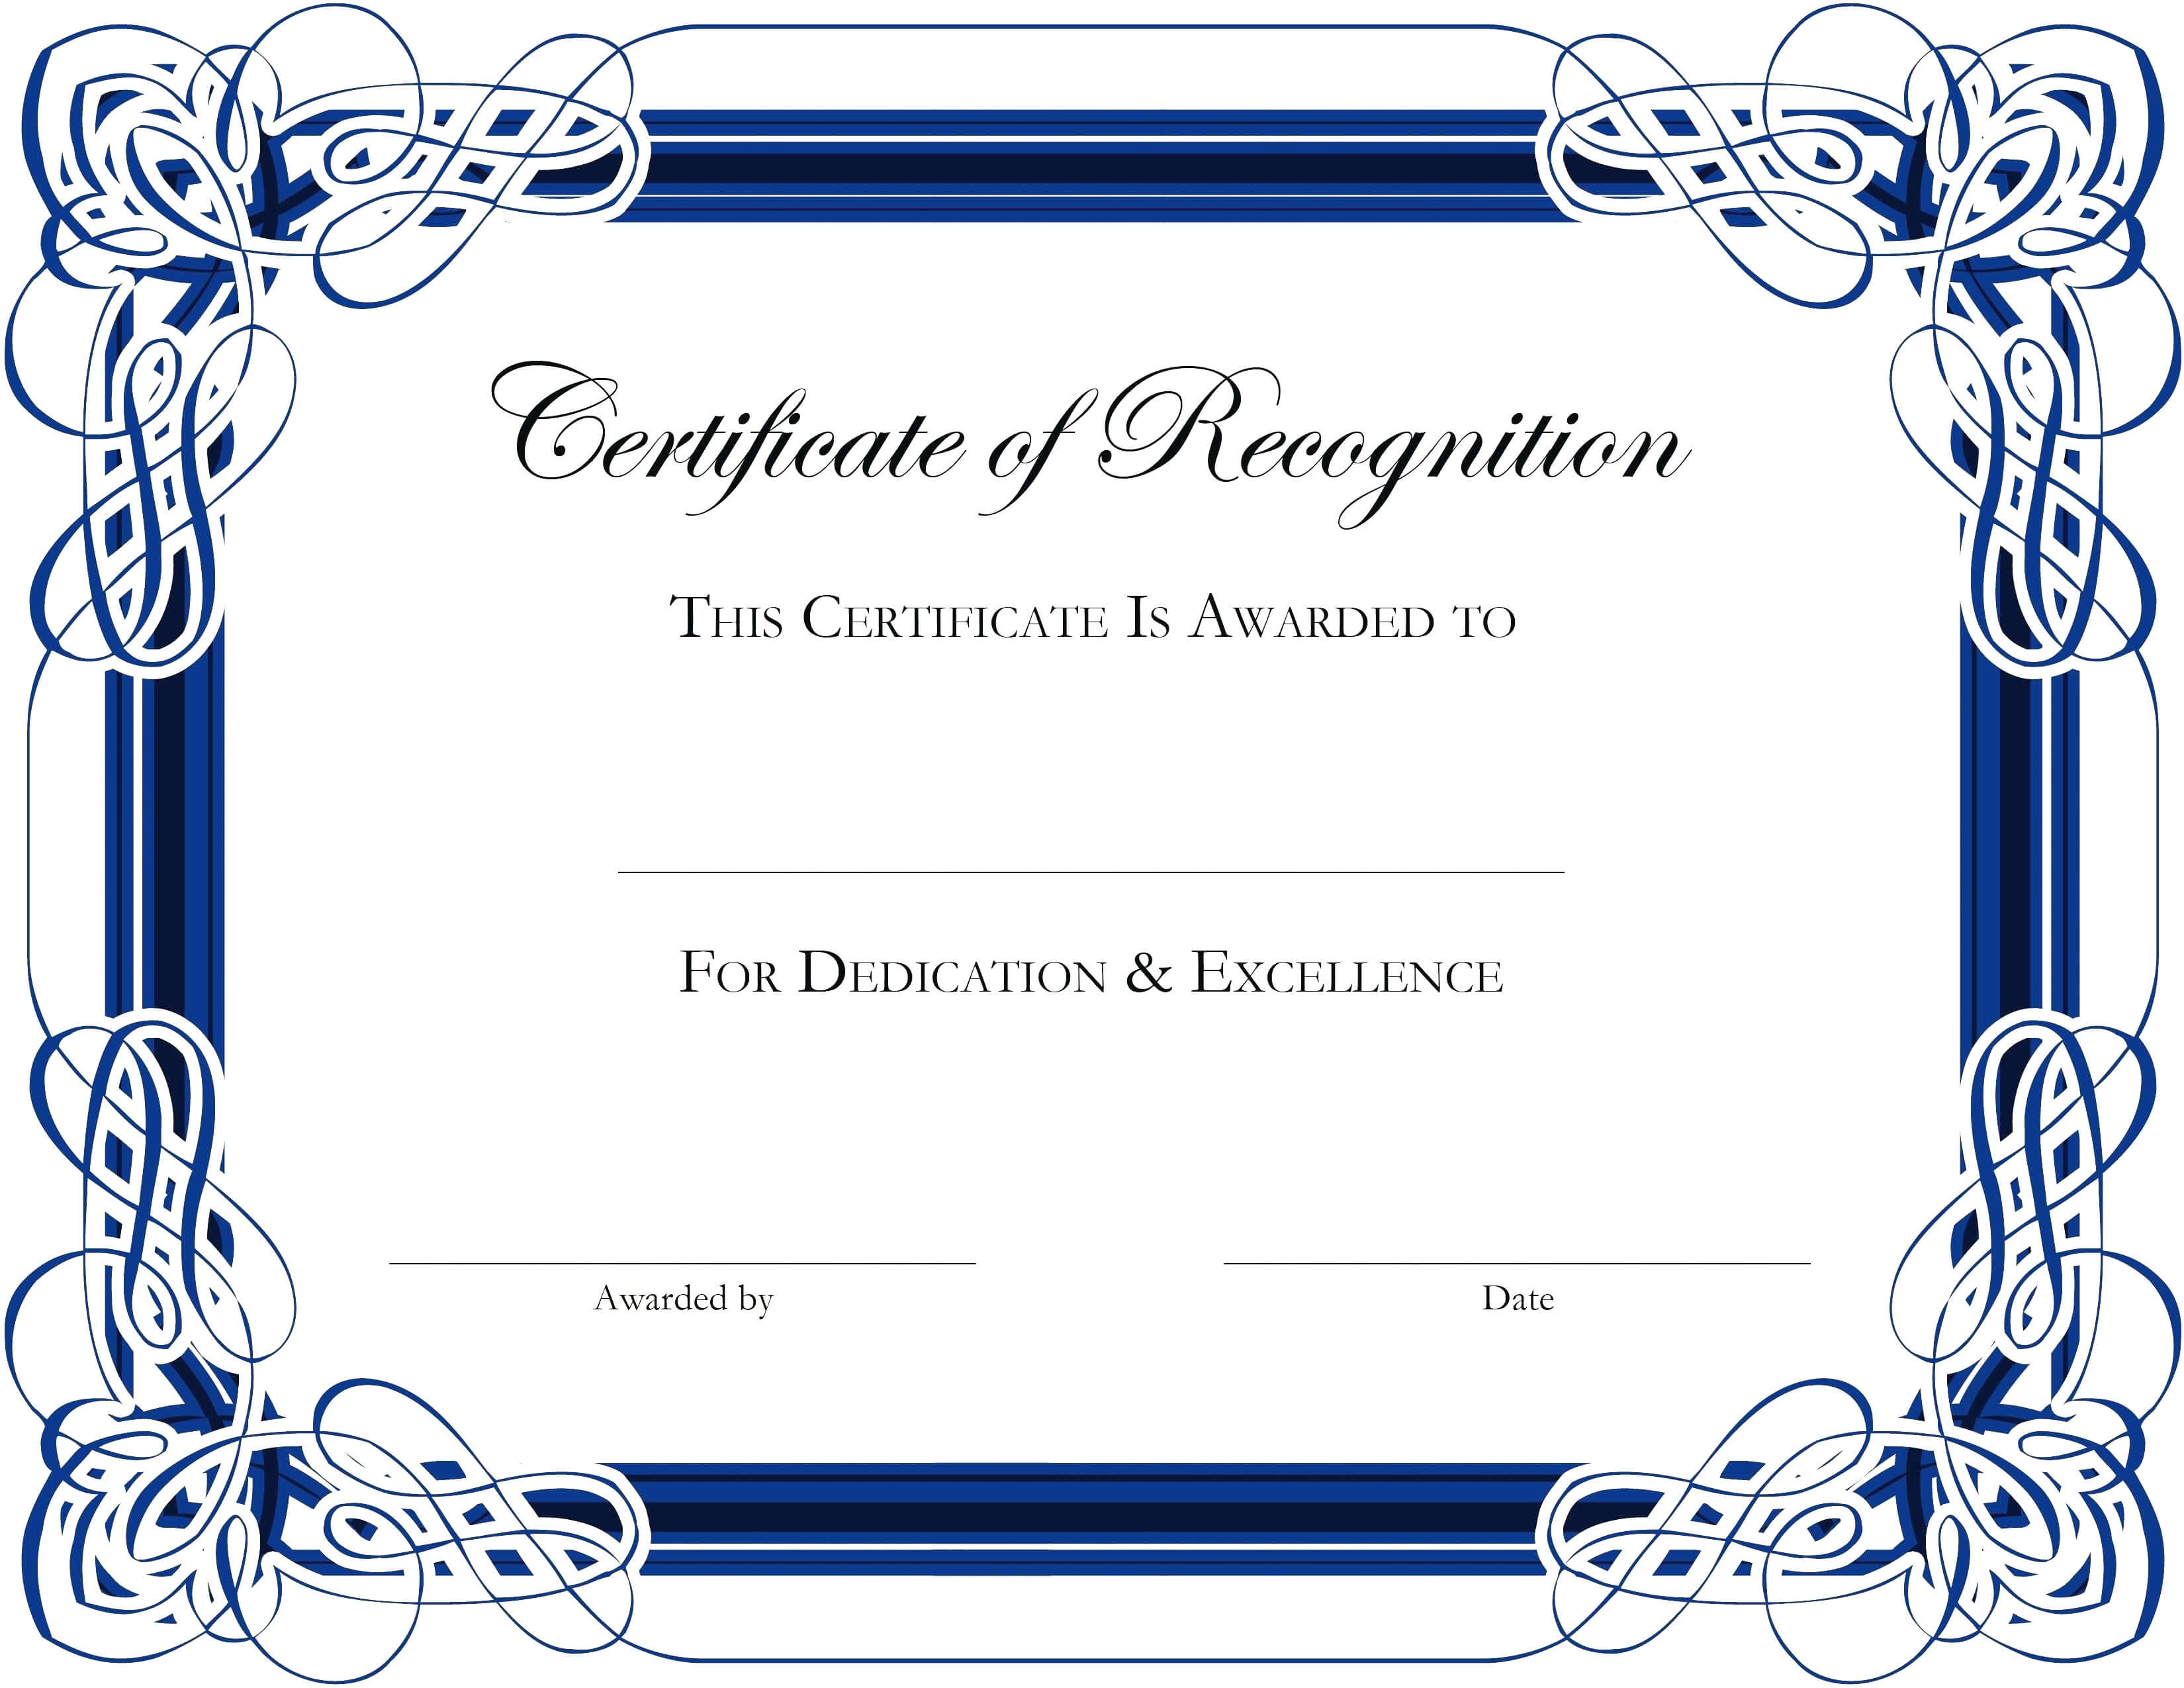 Award Certificate Templates Word 2007 – Atlantaauctionco Pertaining To Award Certificate Templates Word 2007